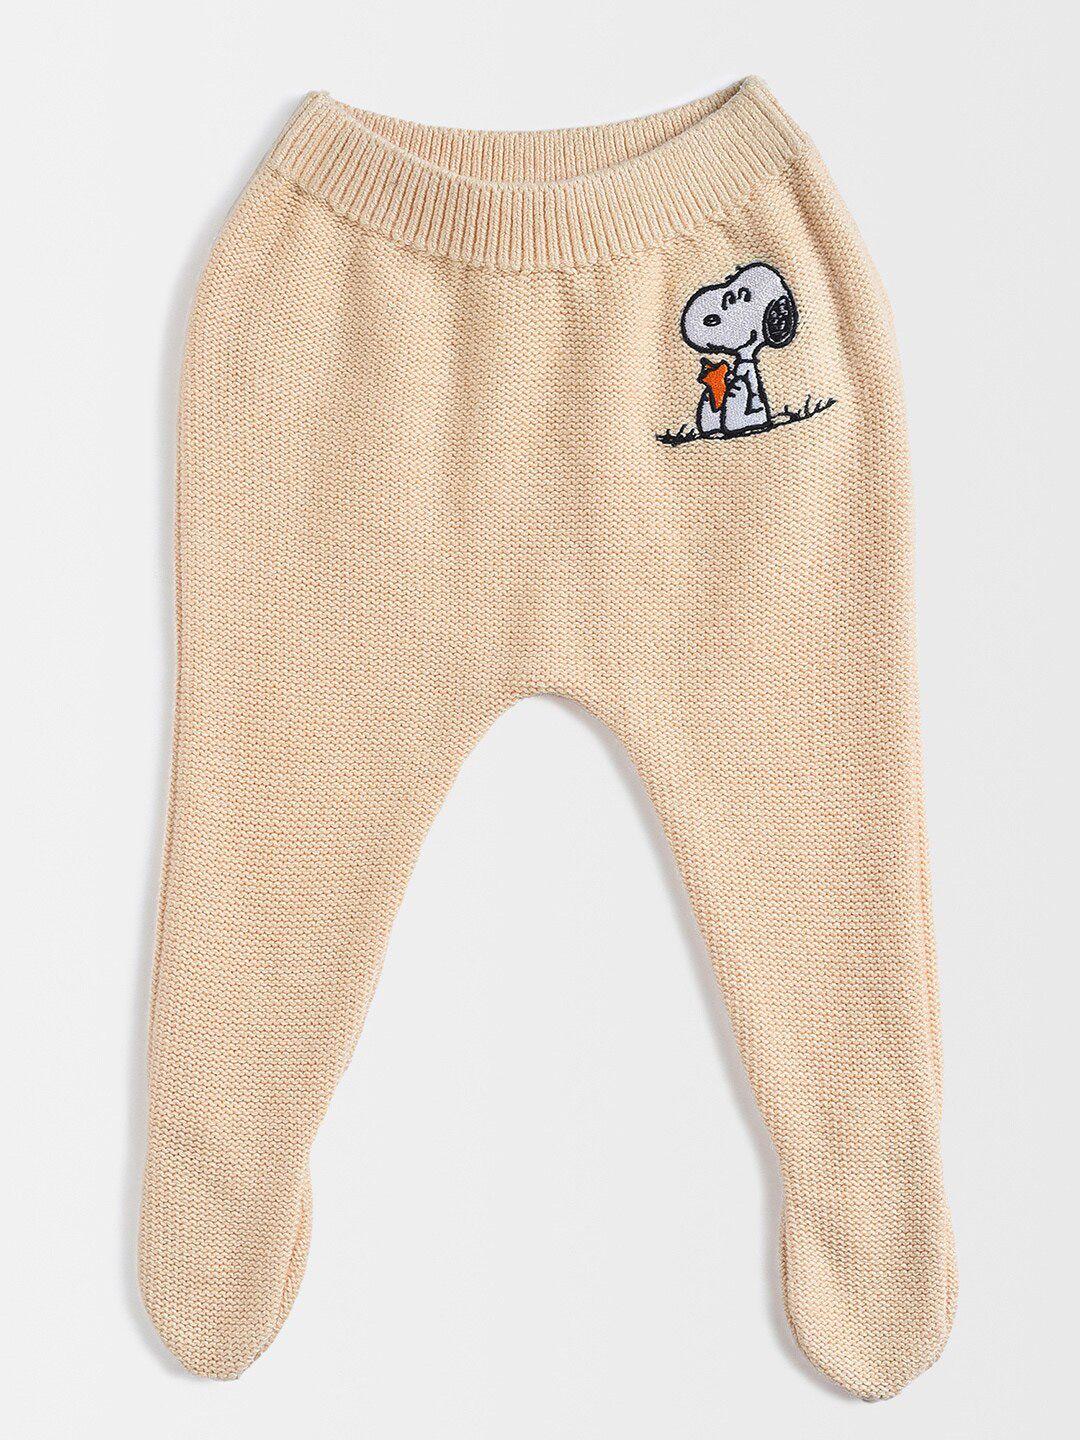 miarcus infant peanuts kids self-design cotton snoopy stockings